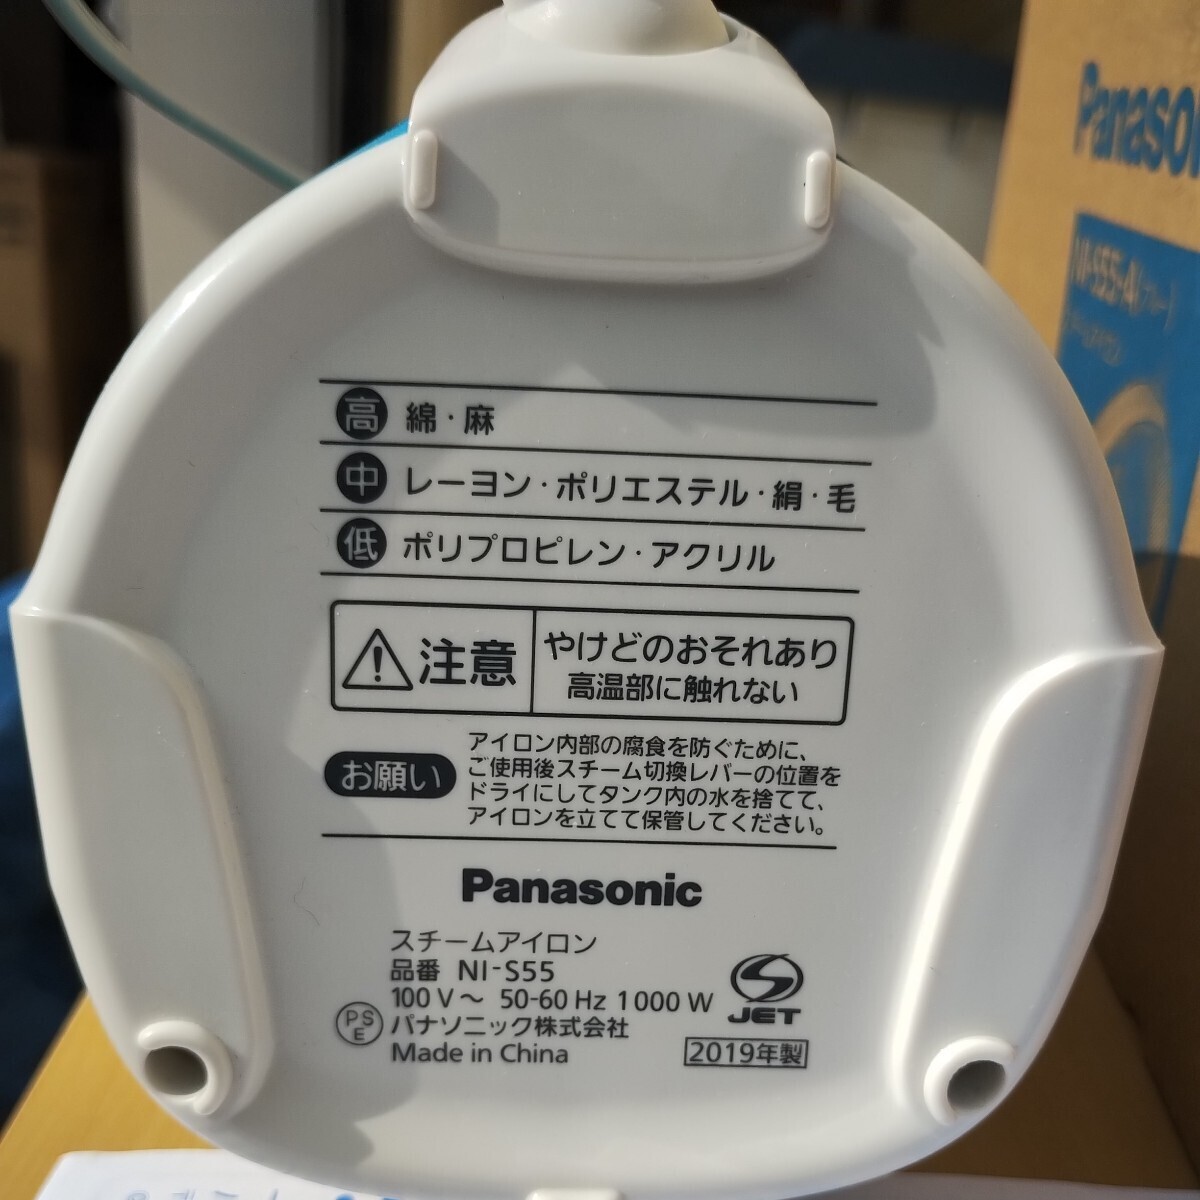 [2019 year made ] operation verification ending Panasonic steam iron NI-S55